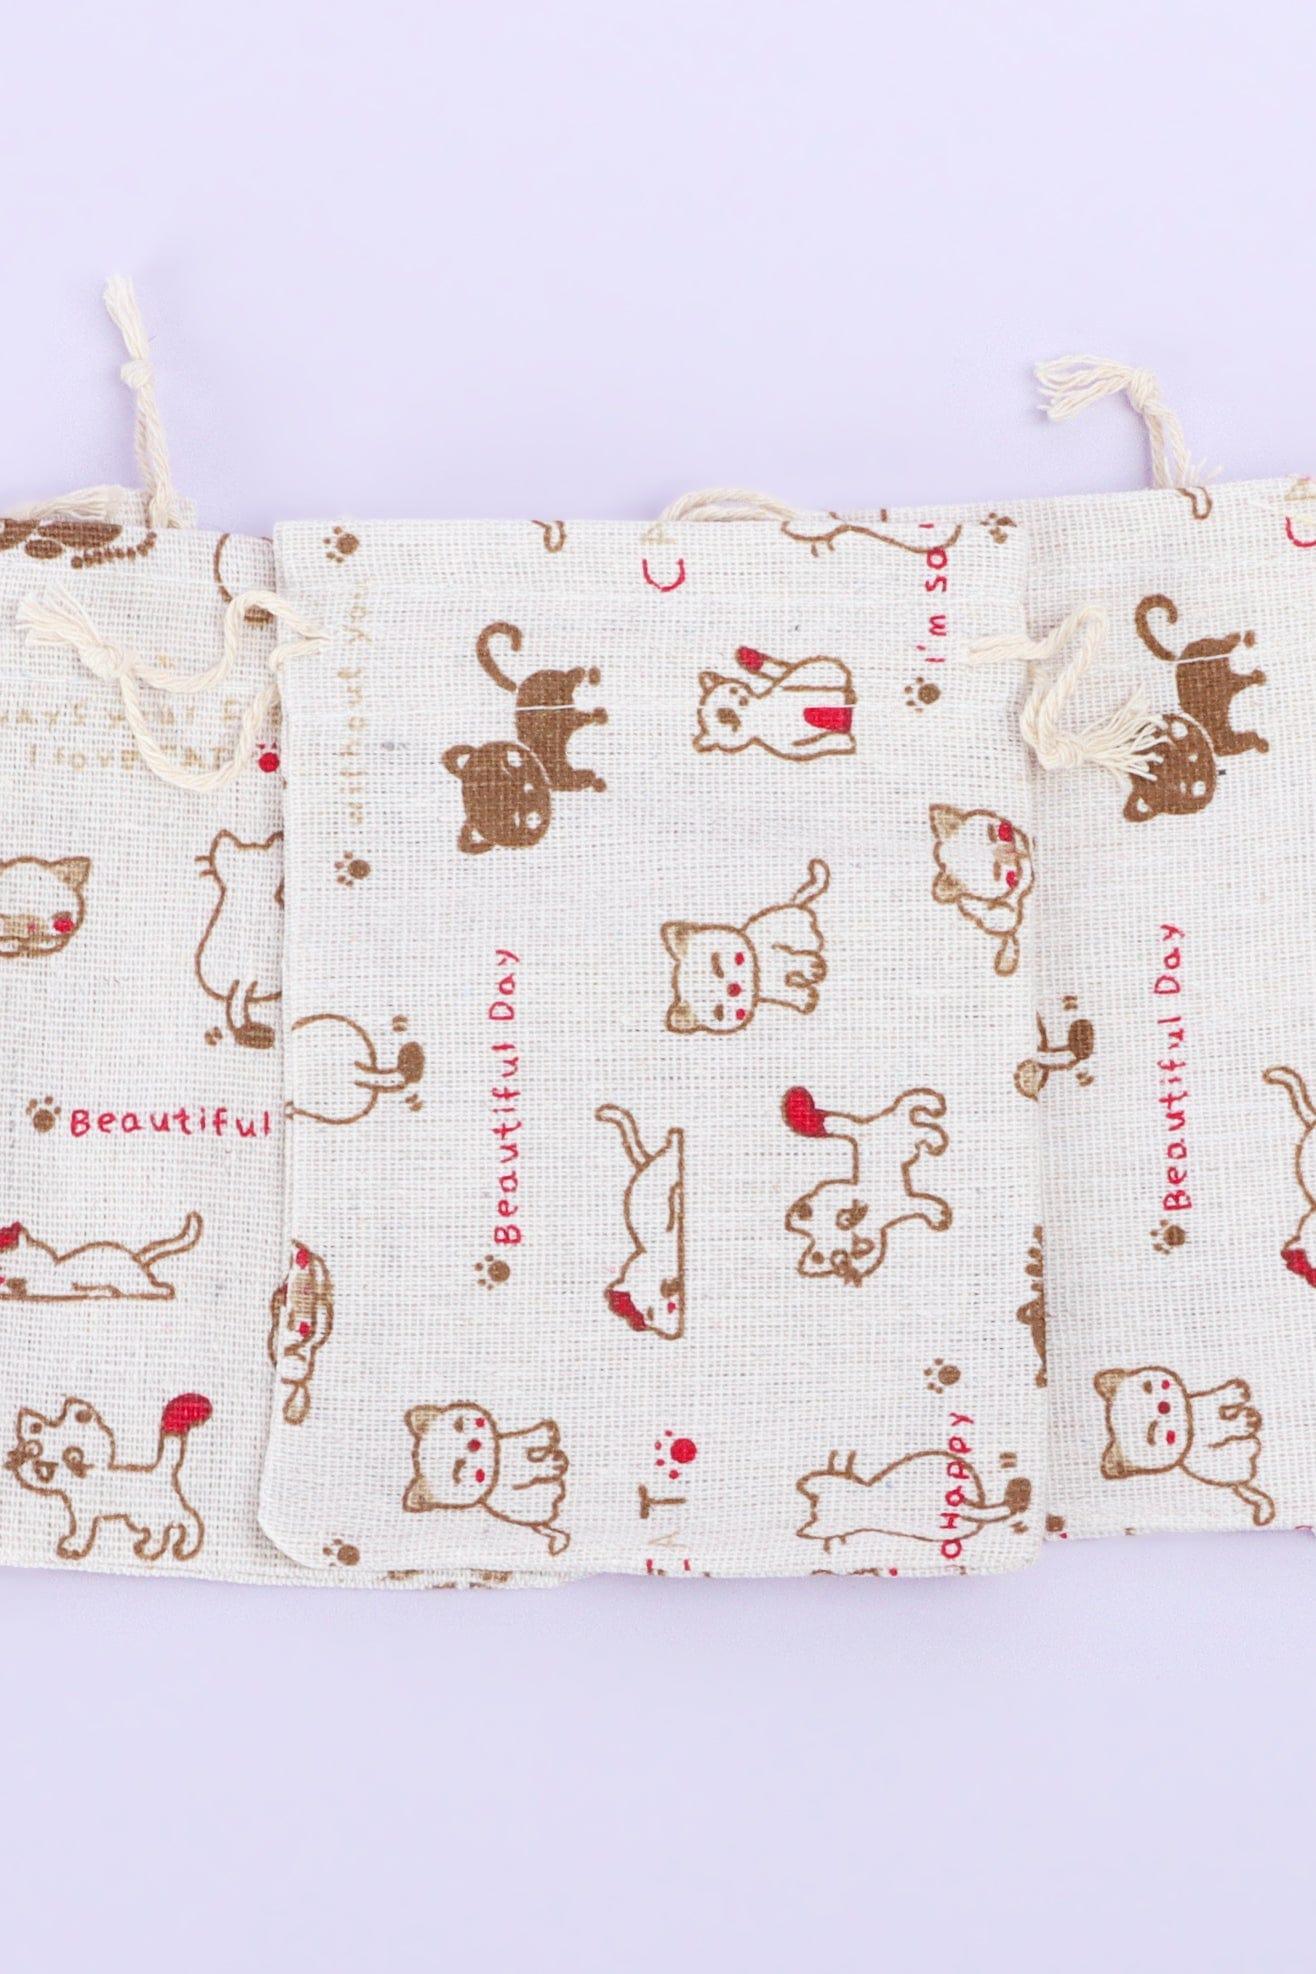 G Decor Gift Bags Set of 5 or 10 - Charming Cat Elegance: Hessian Gift Sacks with Kittens